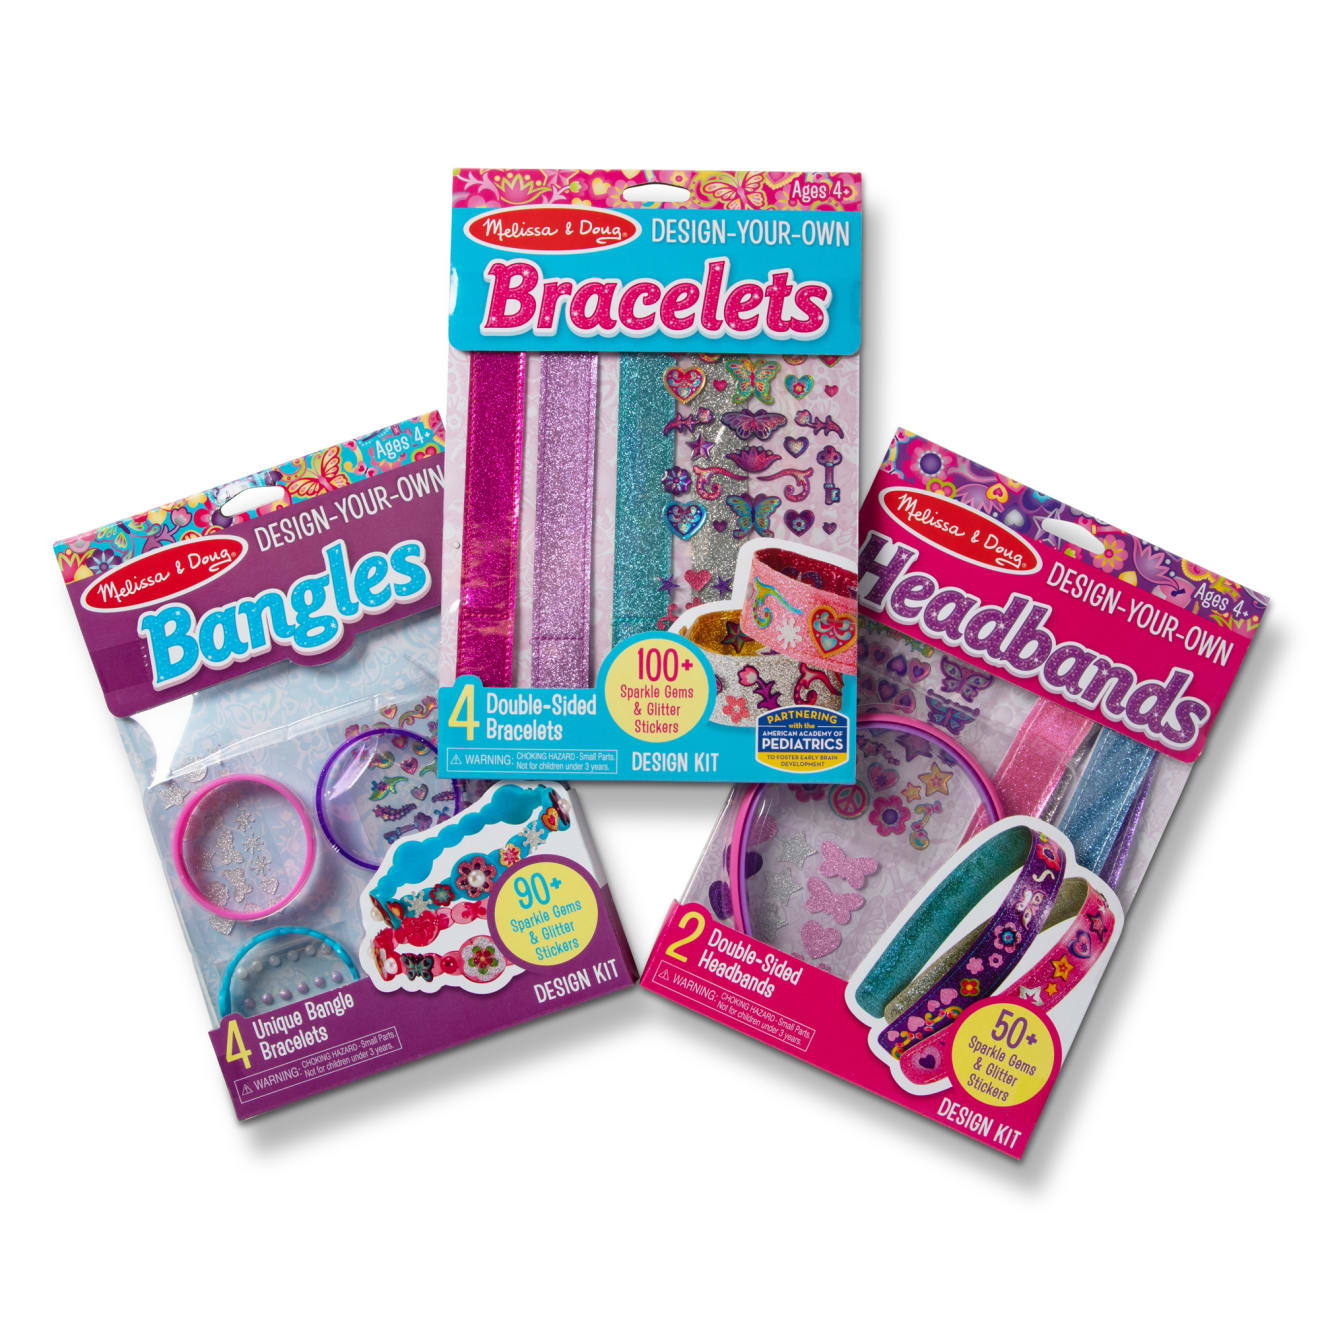 DYO Accessories Bundle - Bracelets, Headbands and Bangles- Melissa and Doug